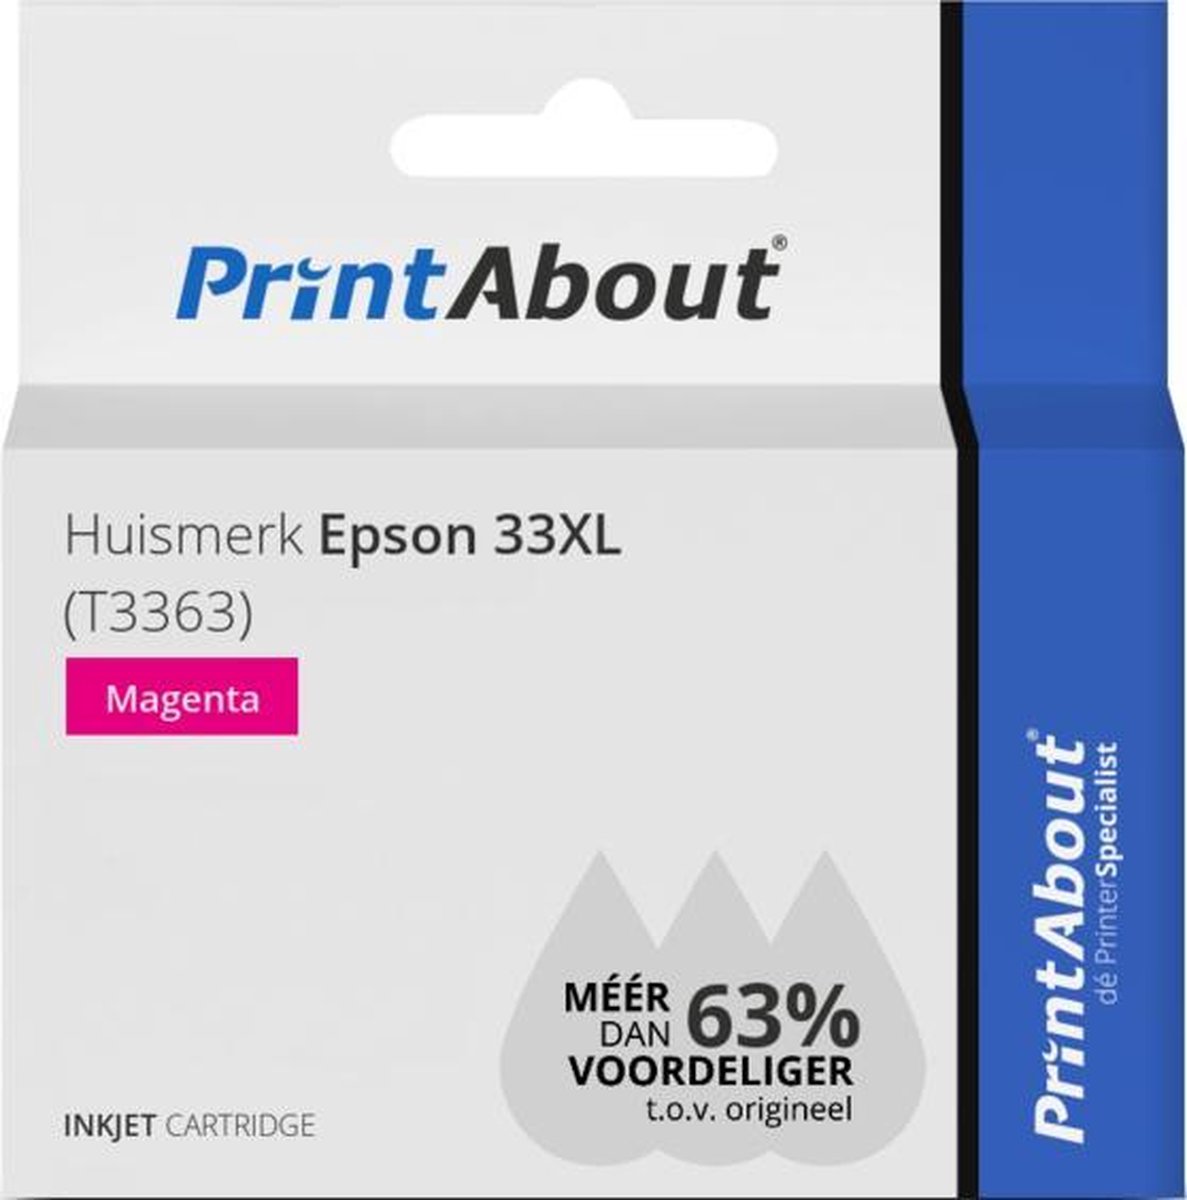 PrintAbout Huismerk Epson 33XL (T3363) Inktcartridge Hoge capaciteit - Magenta